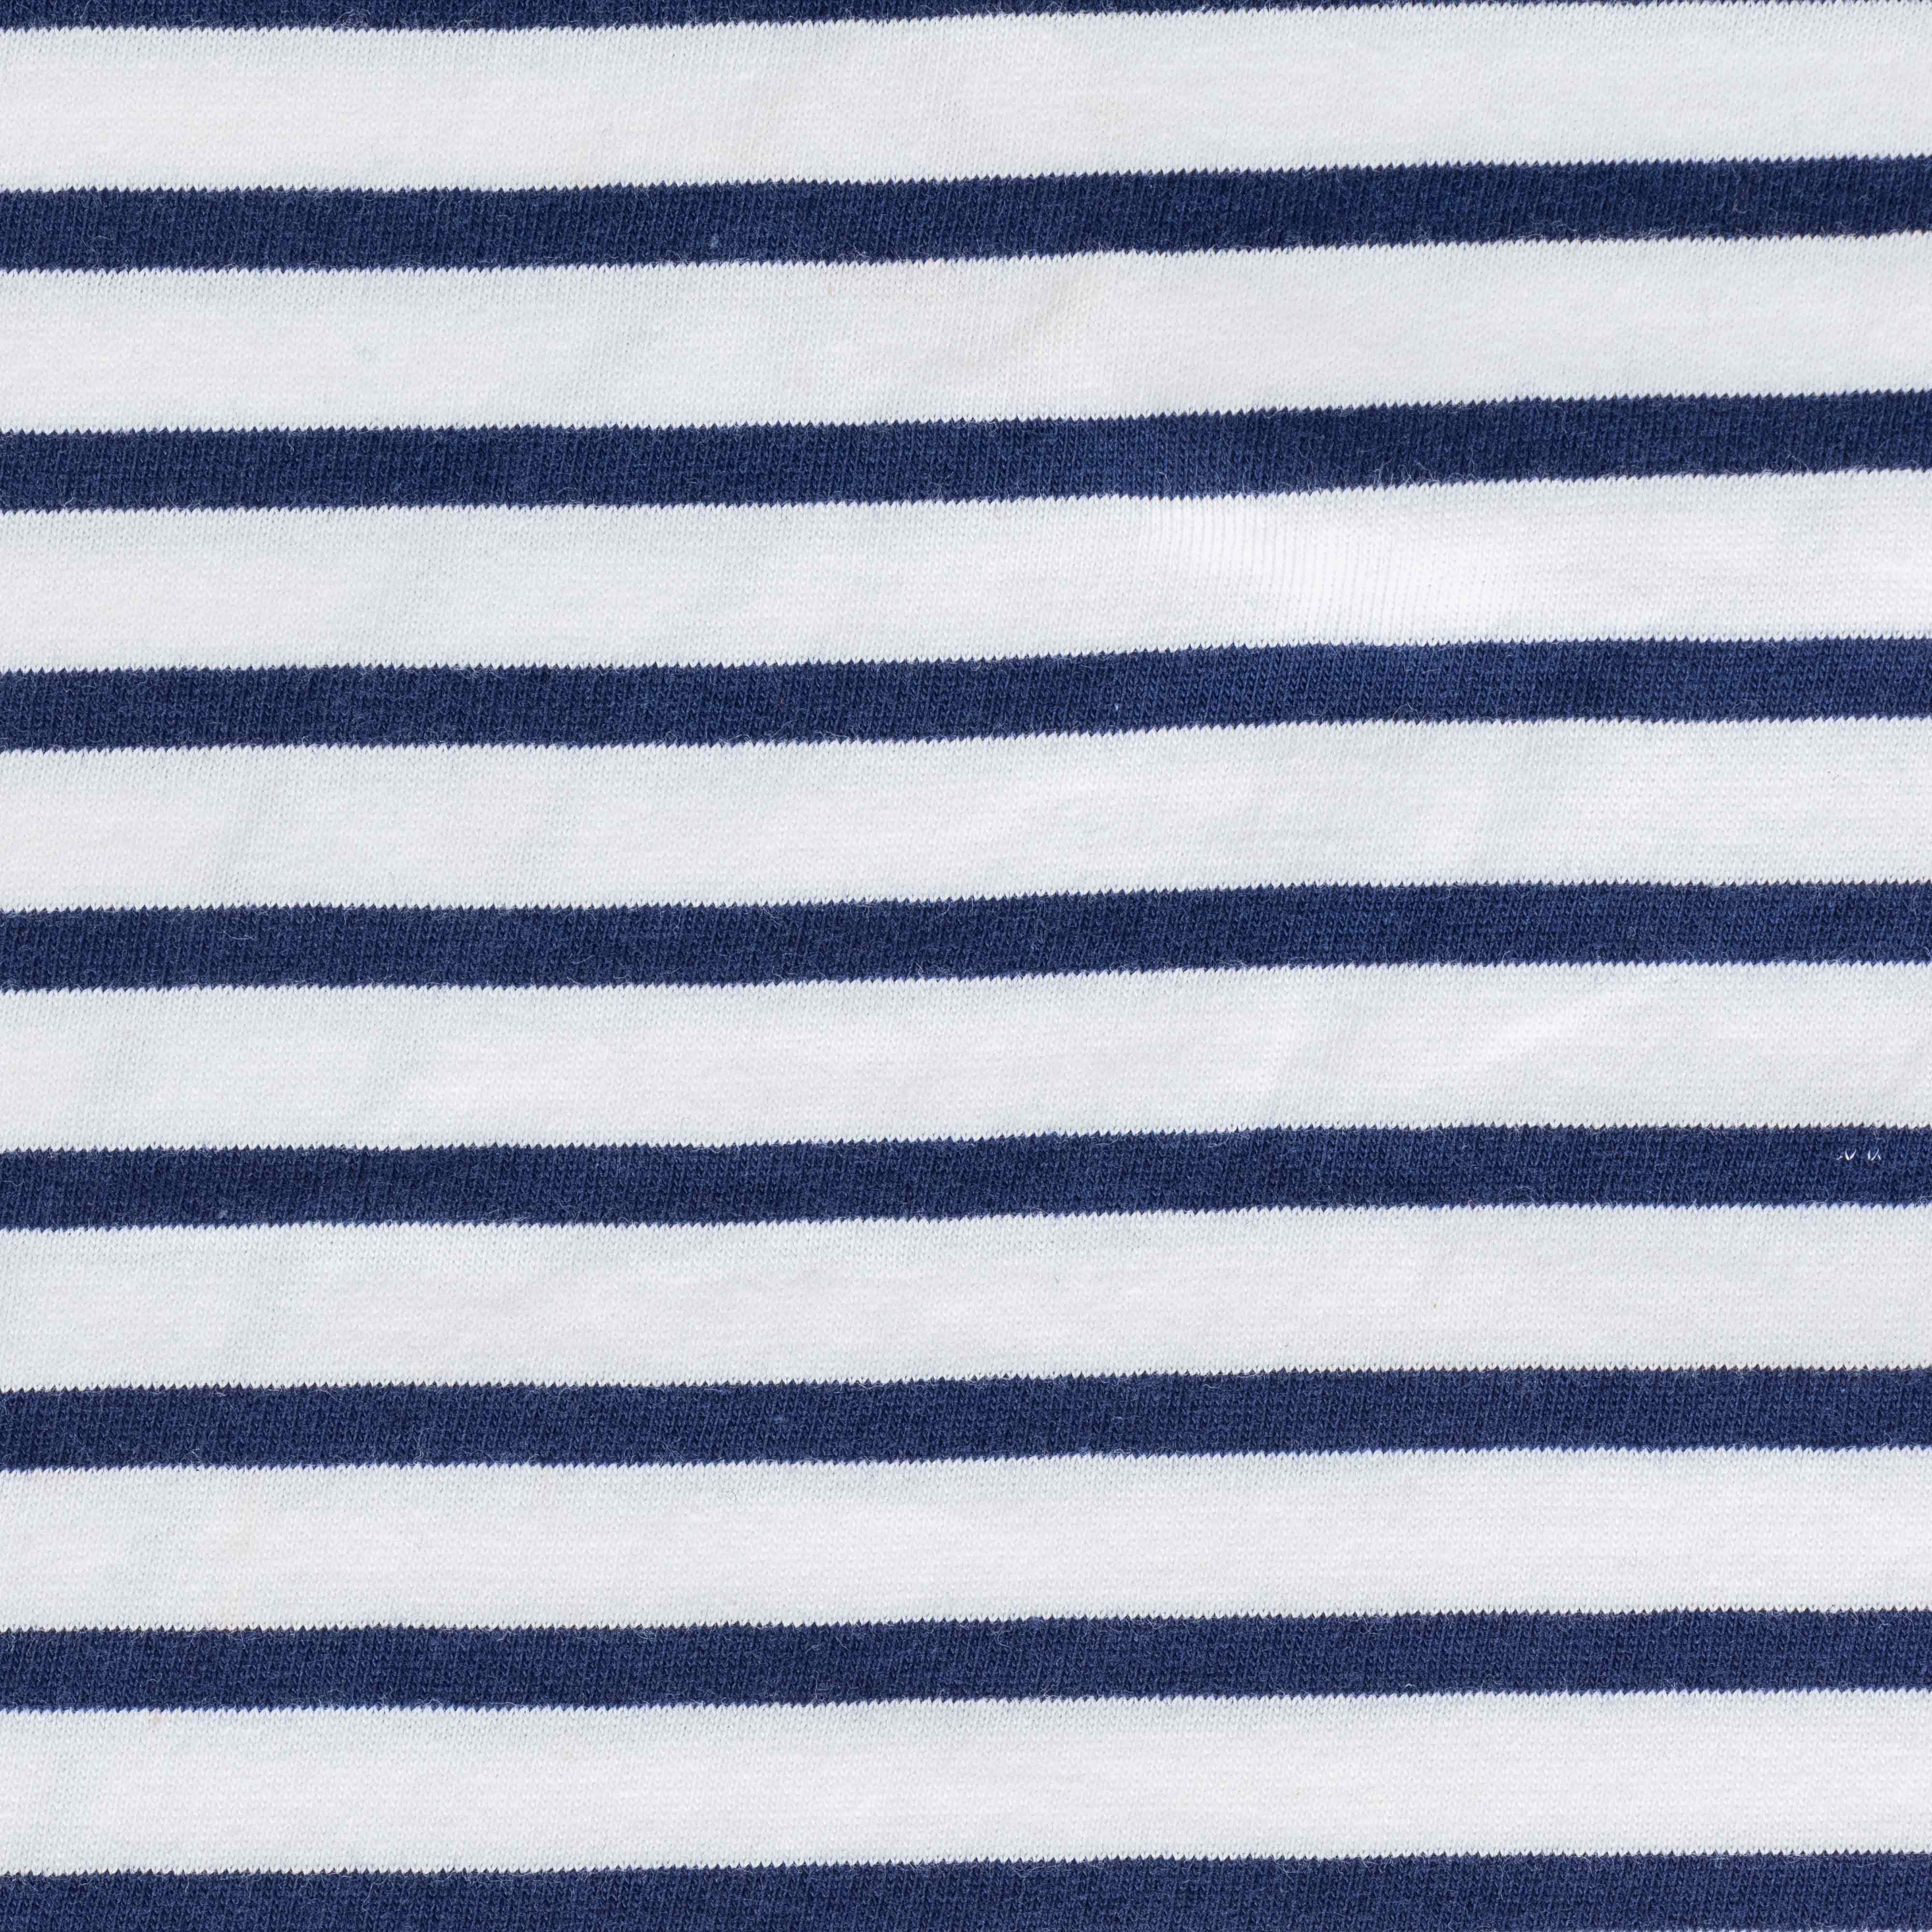 Girls Toddler Striped Round Neck Detail Cotton T-Shirt Navy